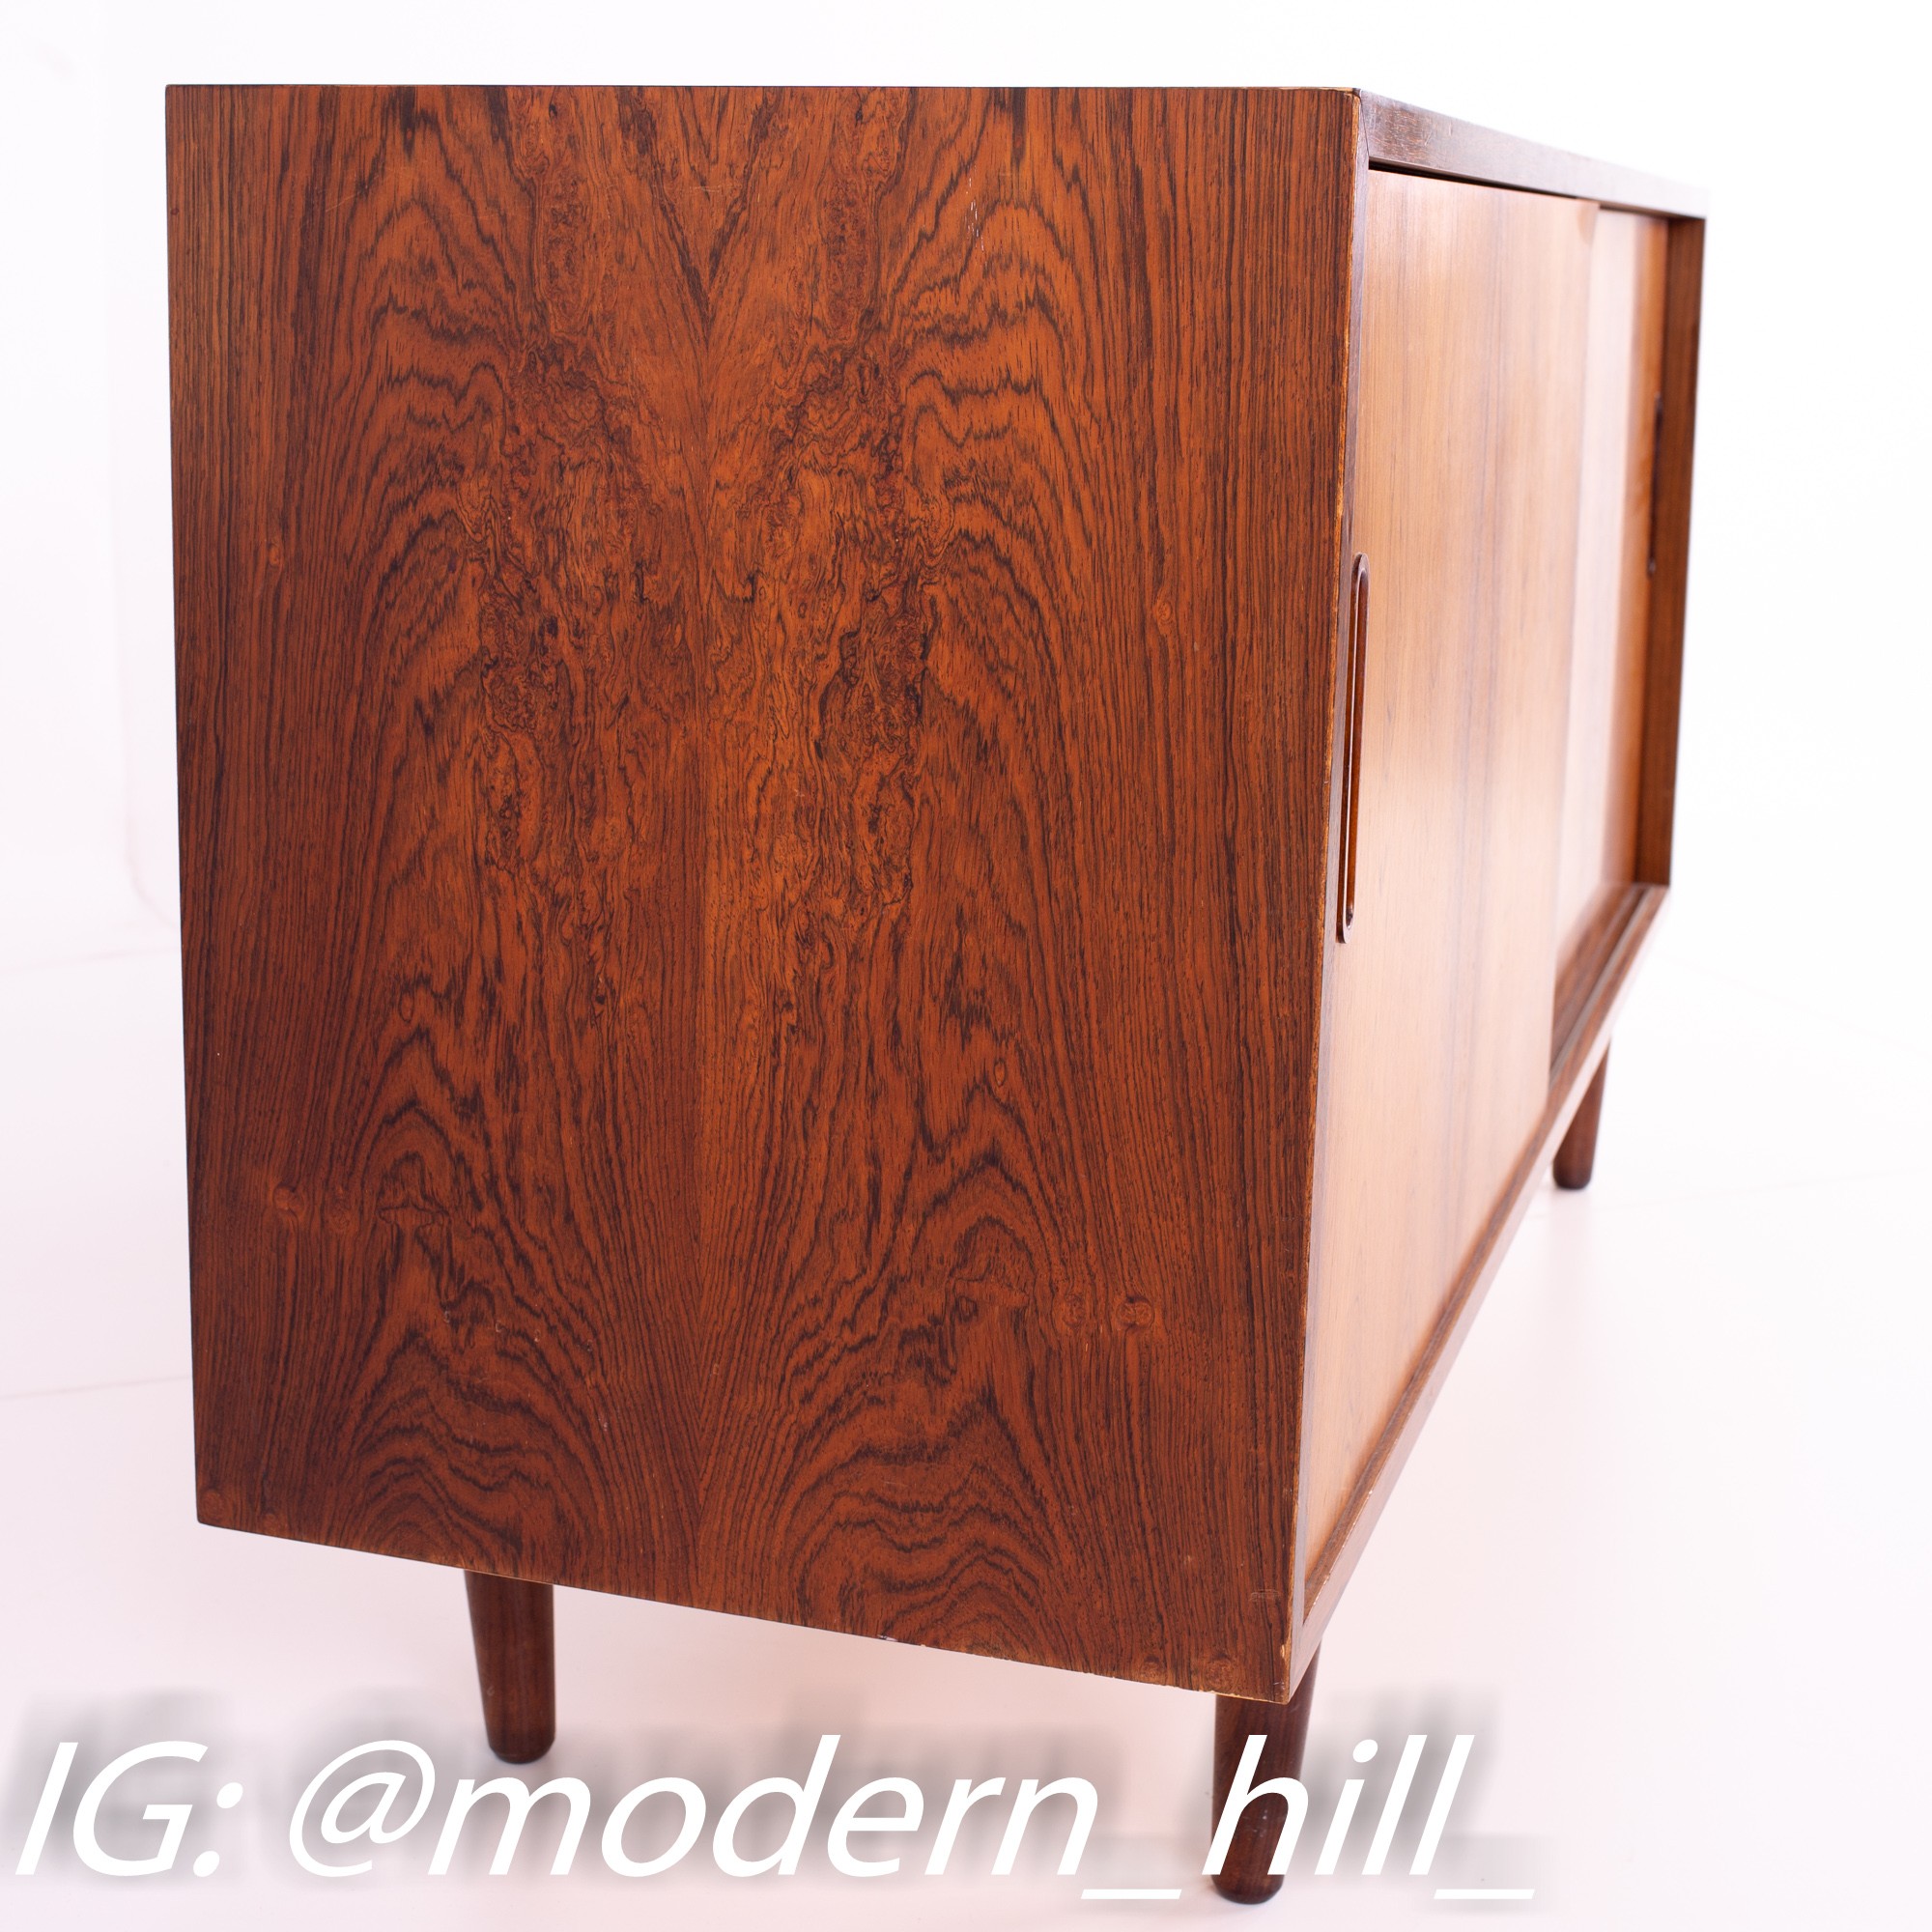 Restored Poul Hundevad Danish Mid Century Rosewood Petite Sideboard Credenza Media Cabinet